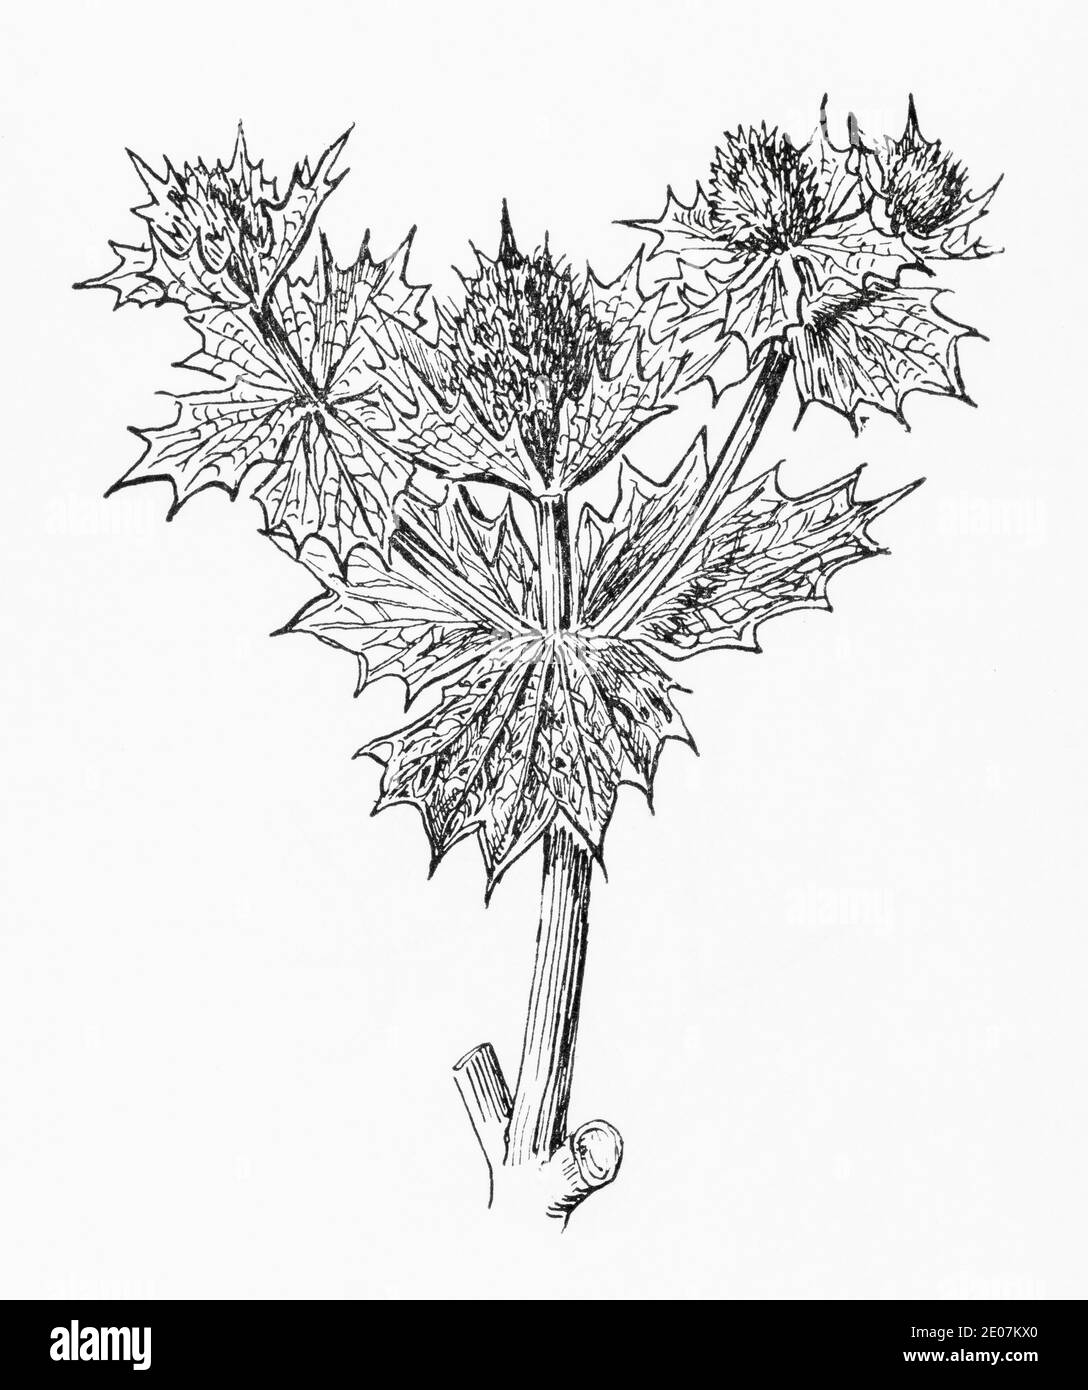 Old botanical illustration engraving of Sea Holly / Eryngium maritimum. Drawings of British umbellifers. Traditional medicinal herbal plant. See Notes Stock Photo